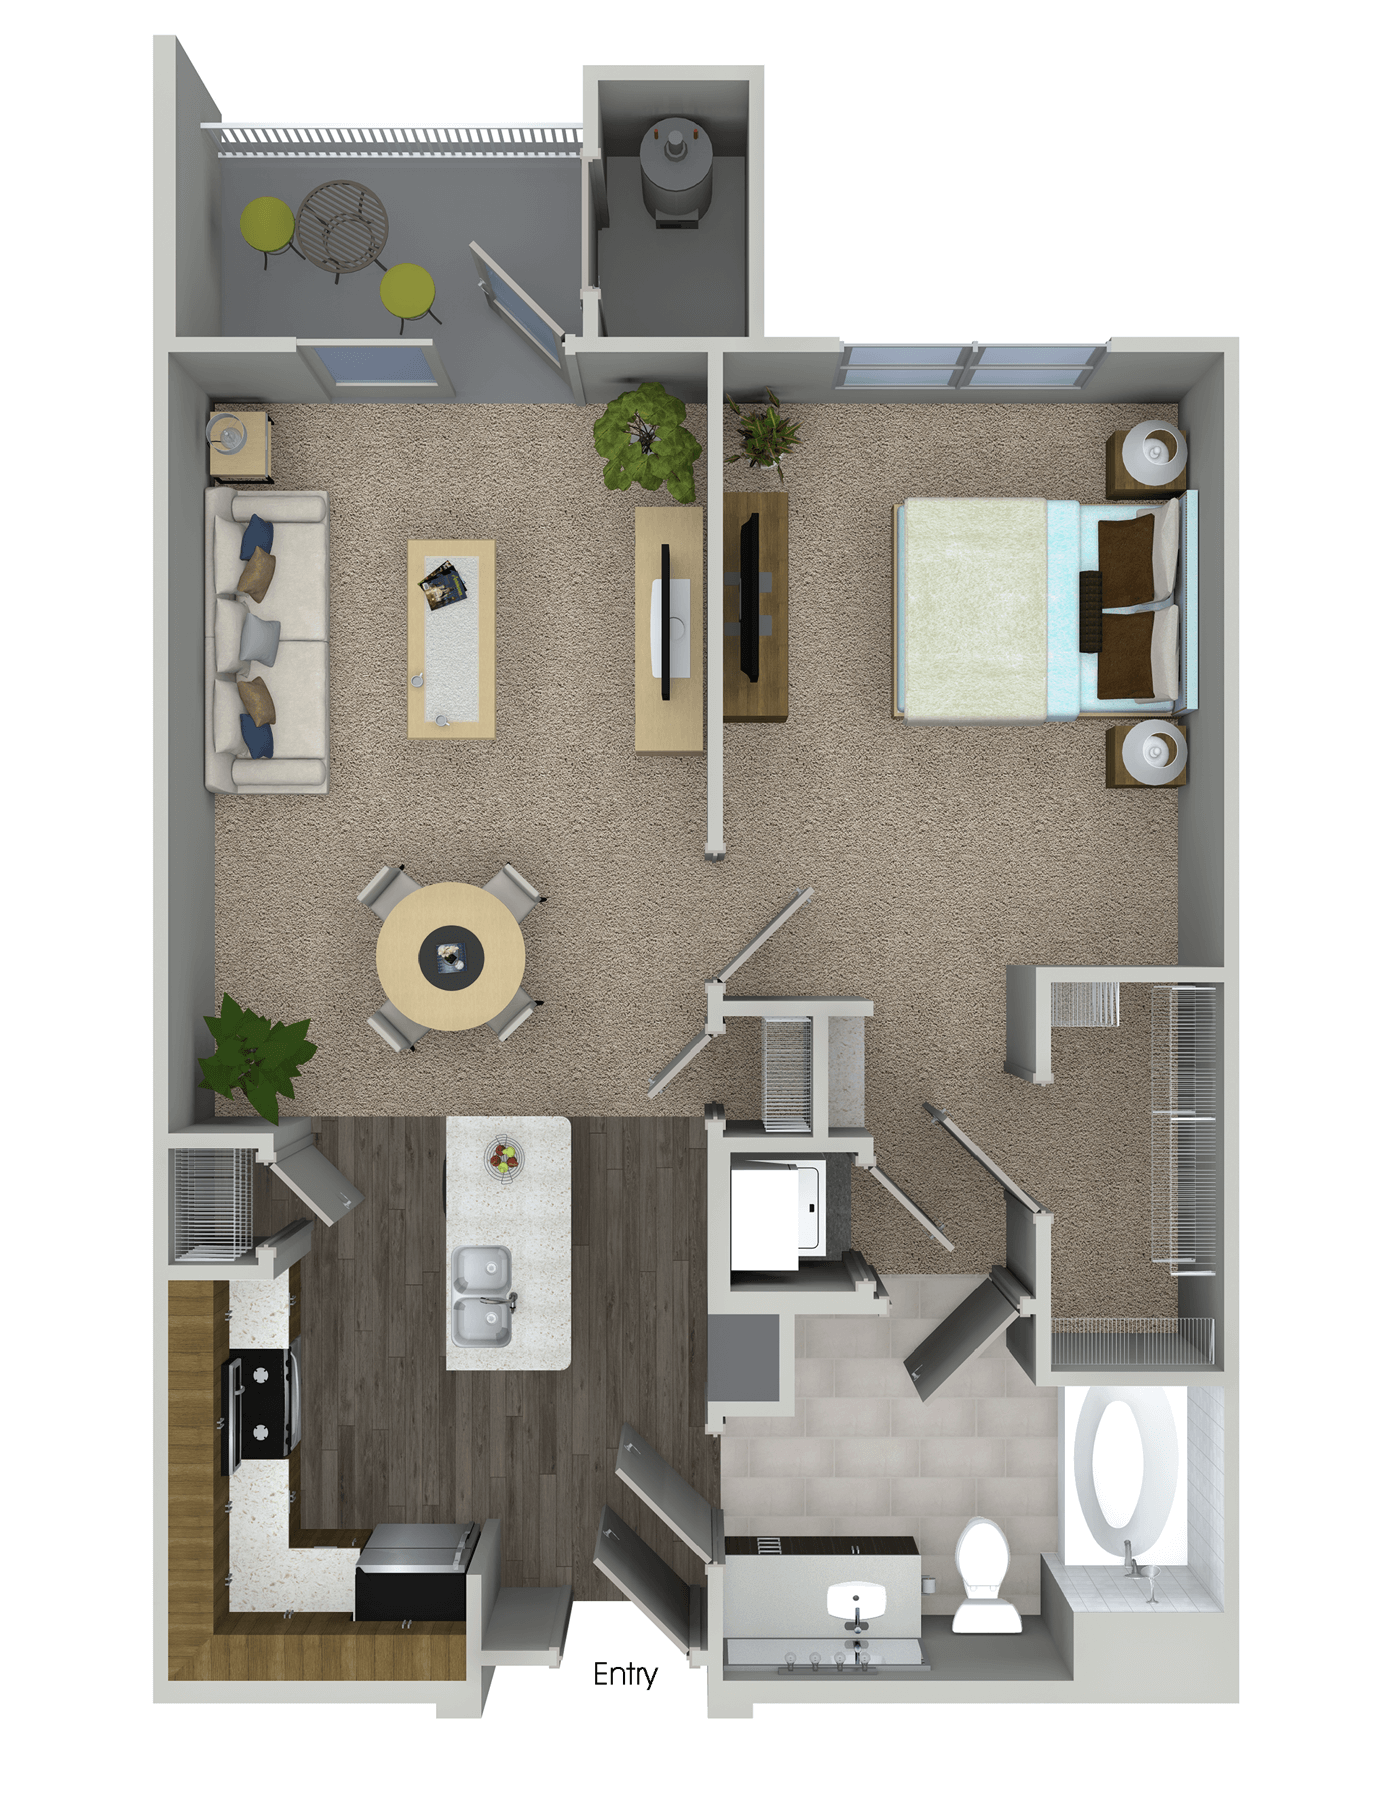 Floorplan for Apartment #4404, 1 bedroom unit at Halstead Marlborough